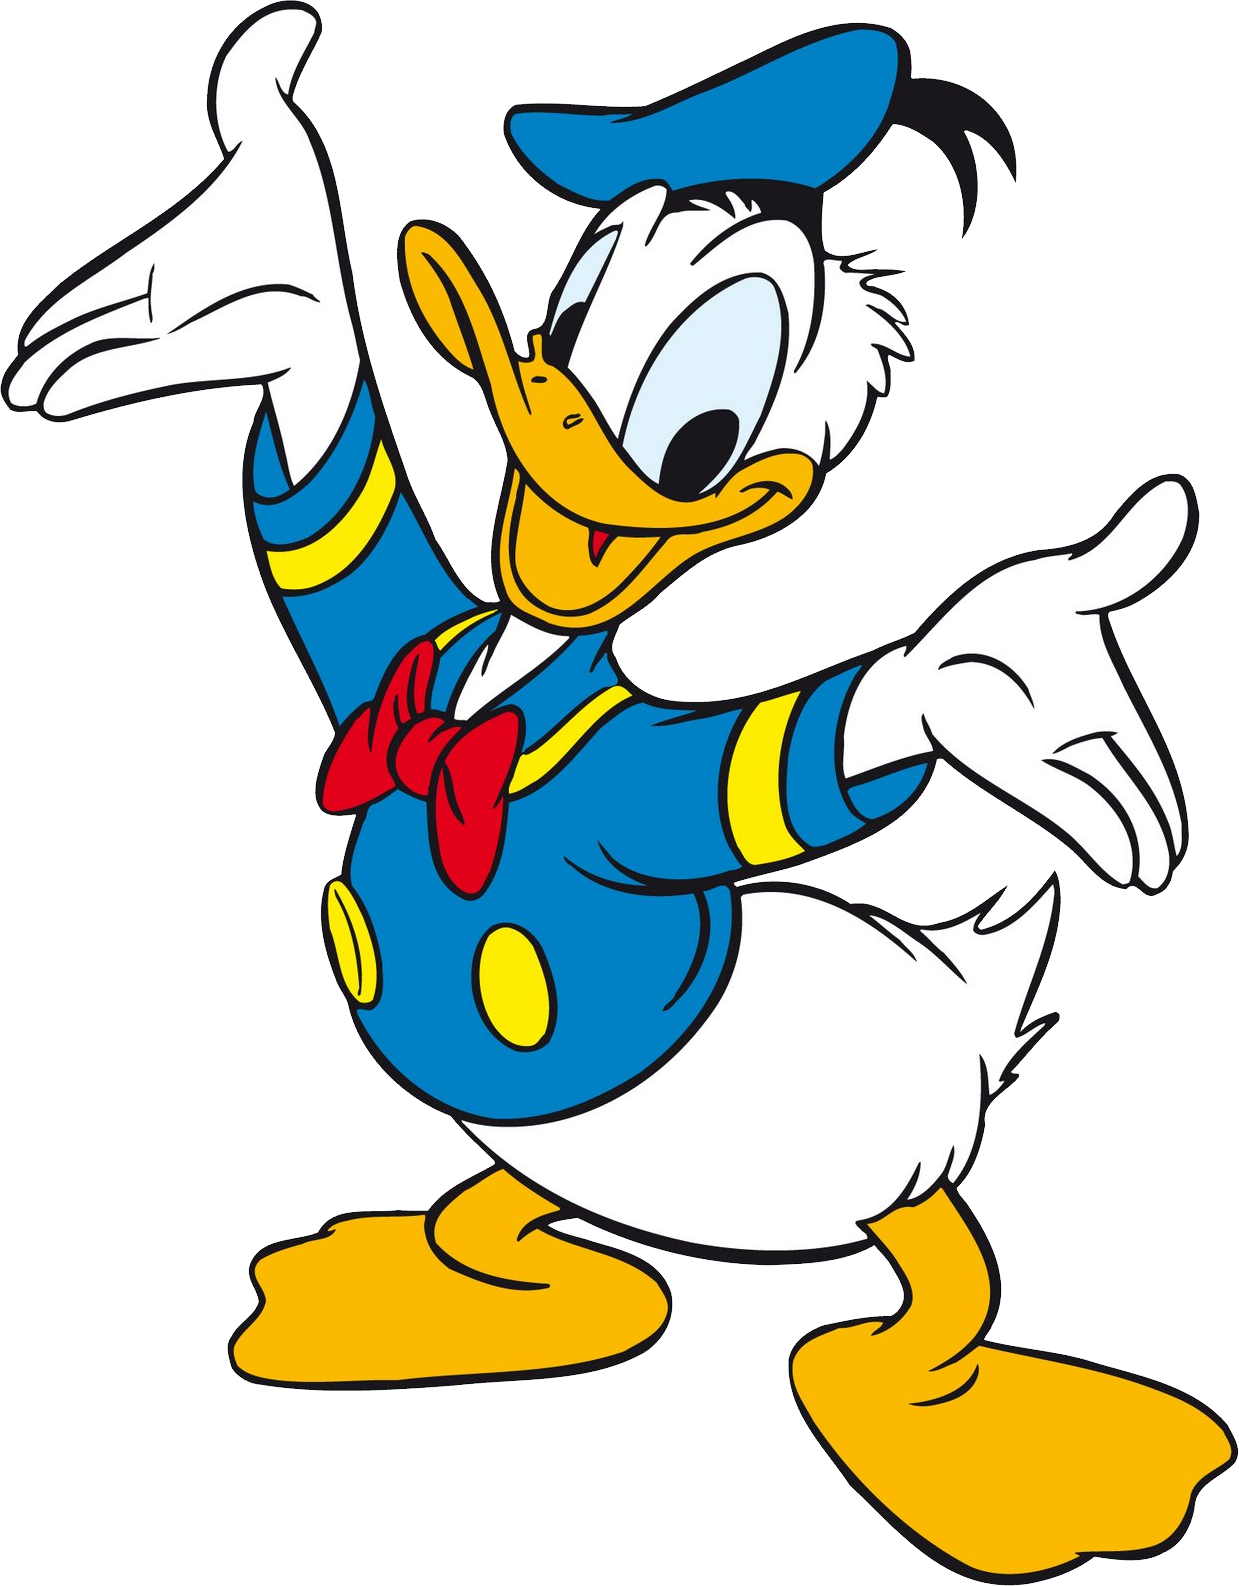 Donald Duck PNG Image - PurePNG | Free transparent CC0 PNG ...